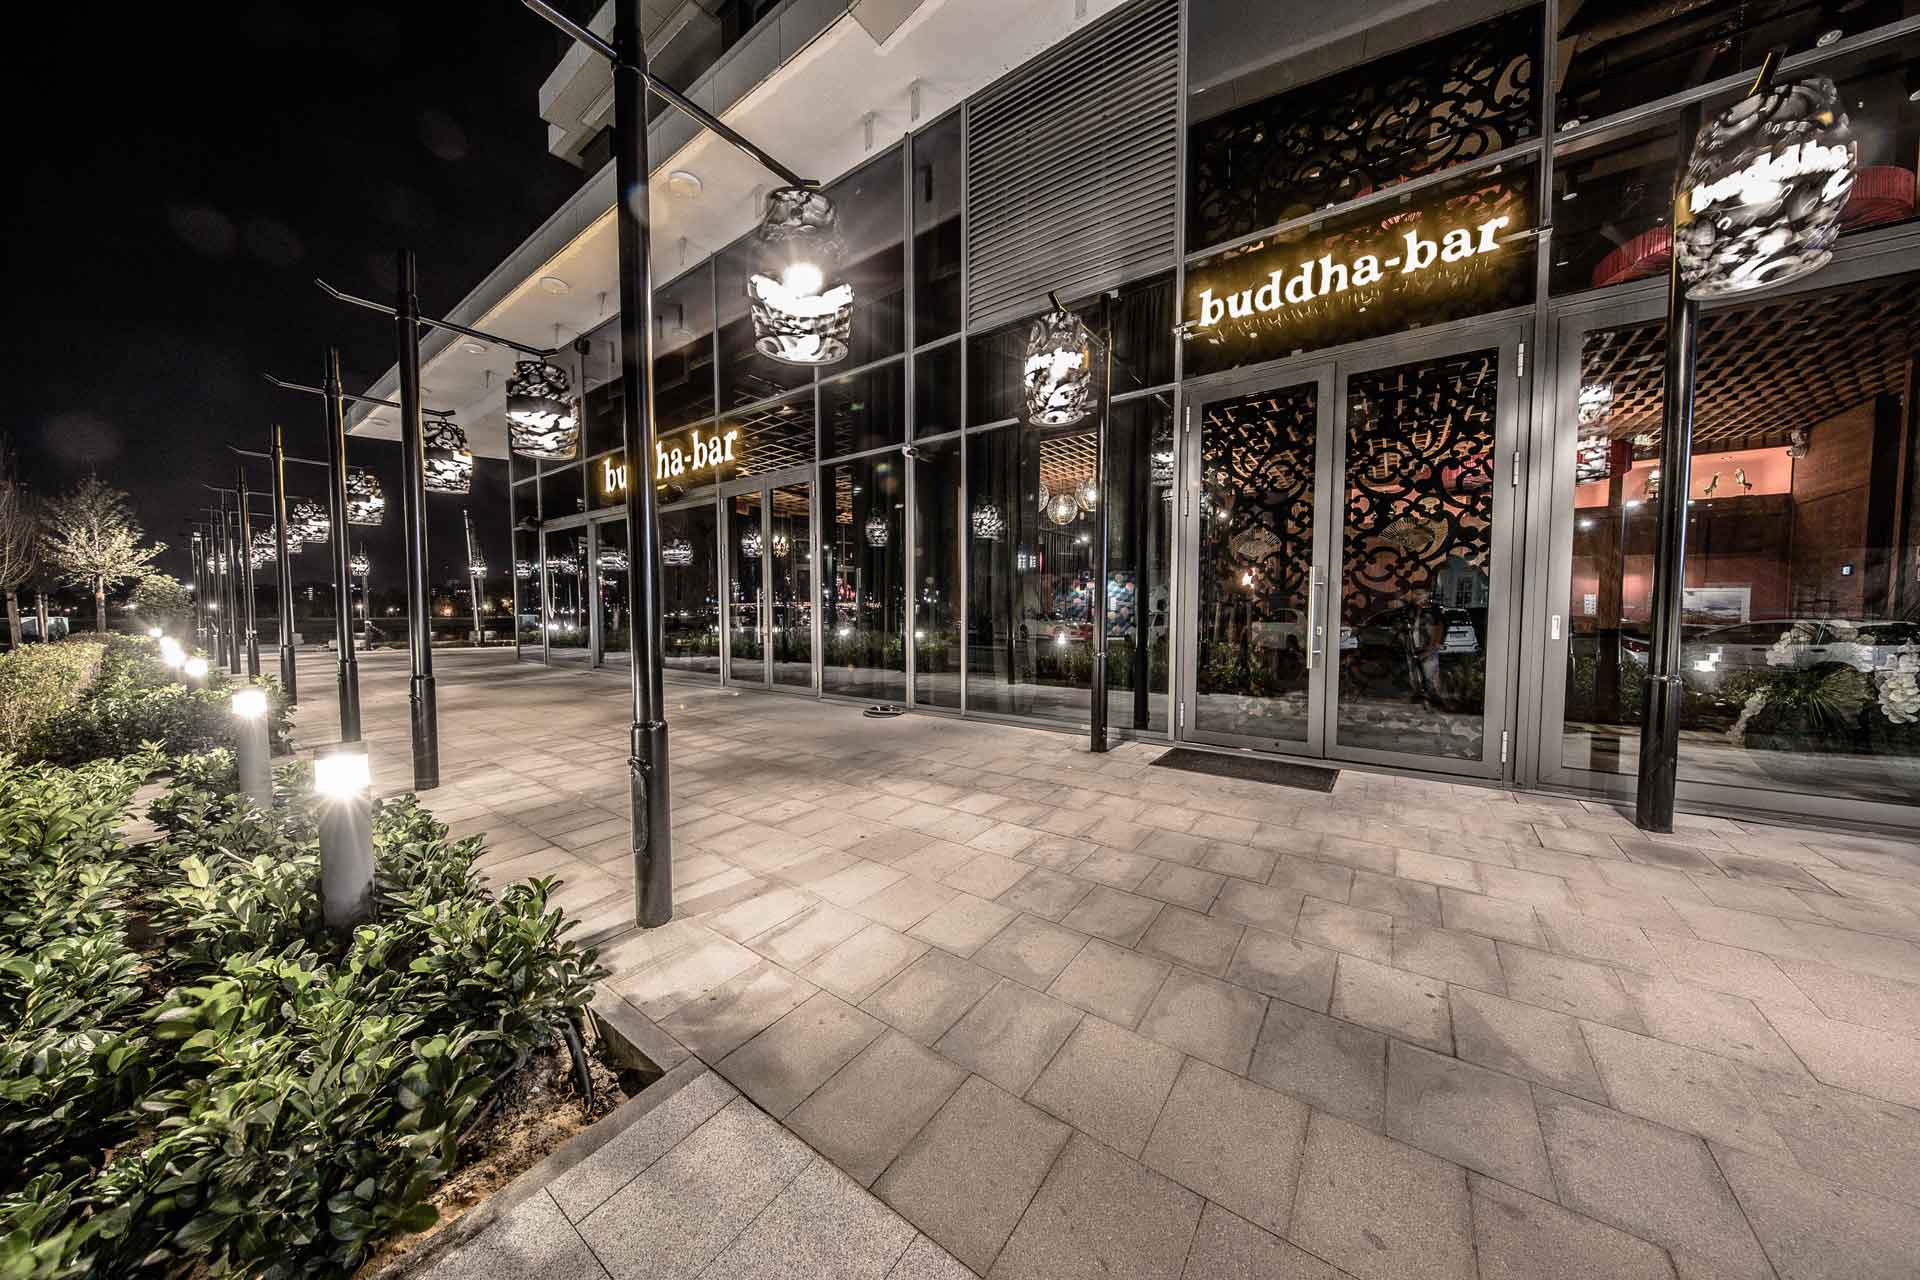 Buddah Bar restoran u Beogradu na vodi